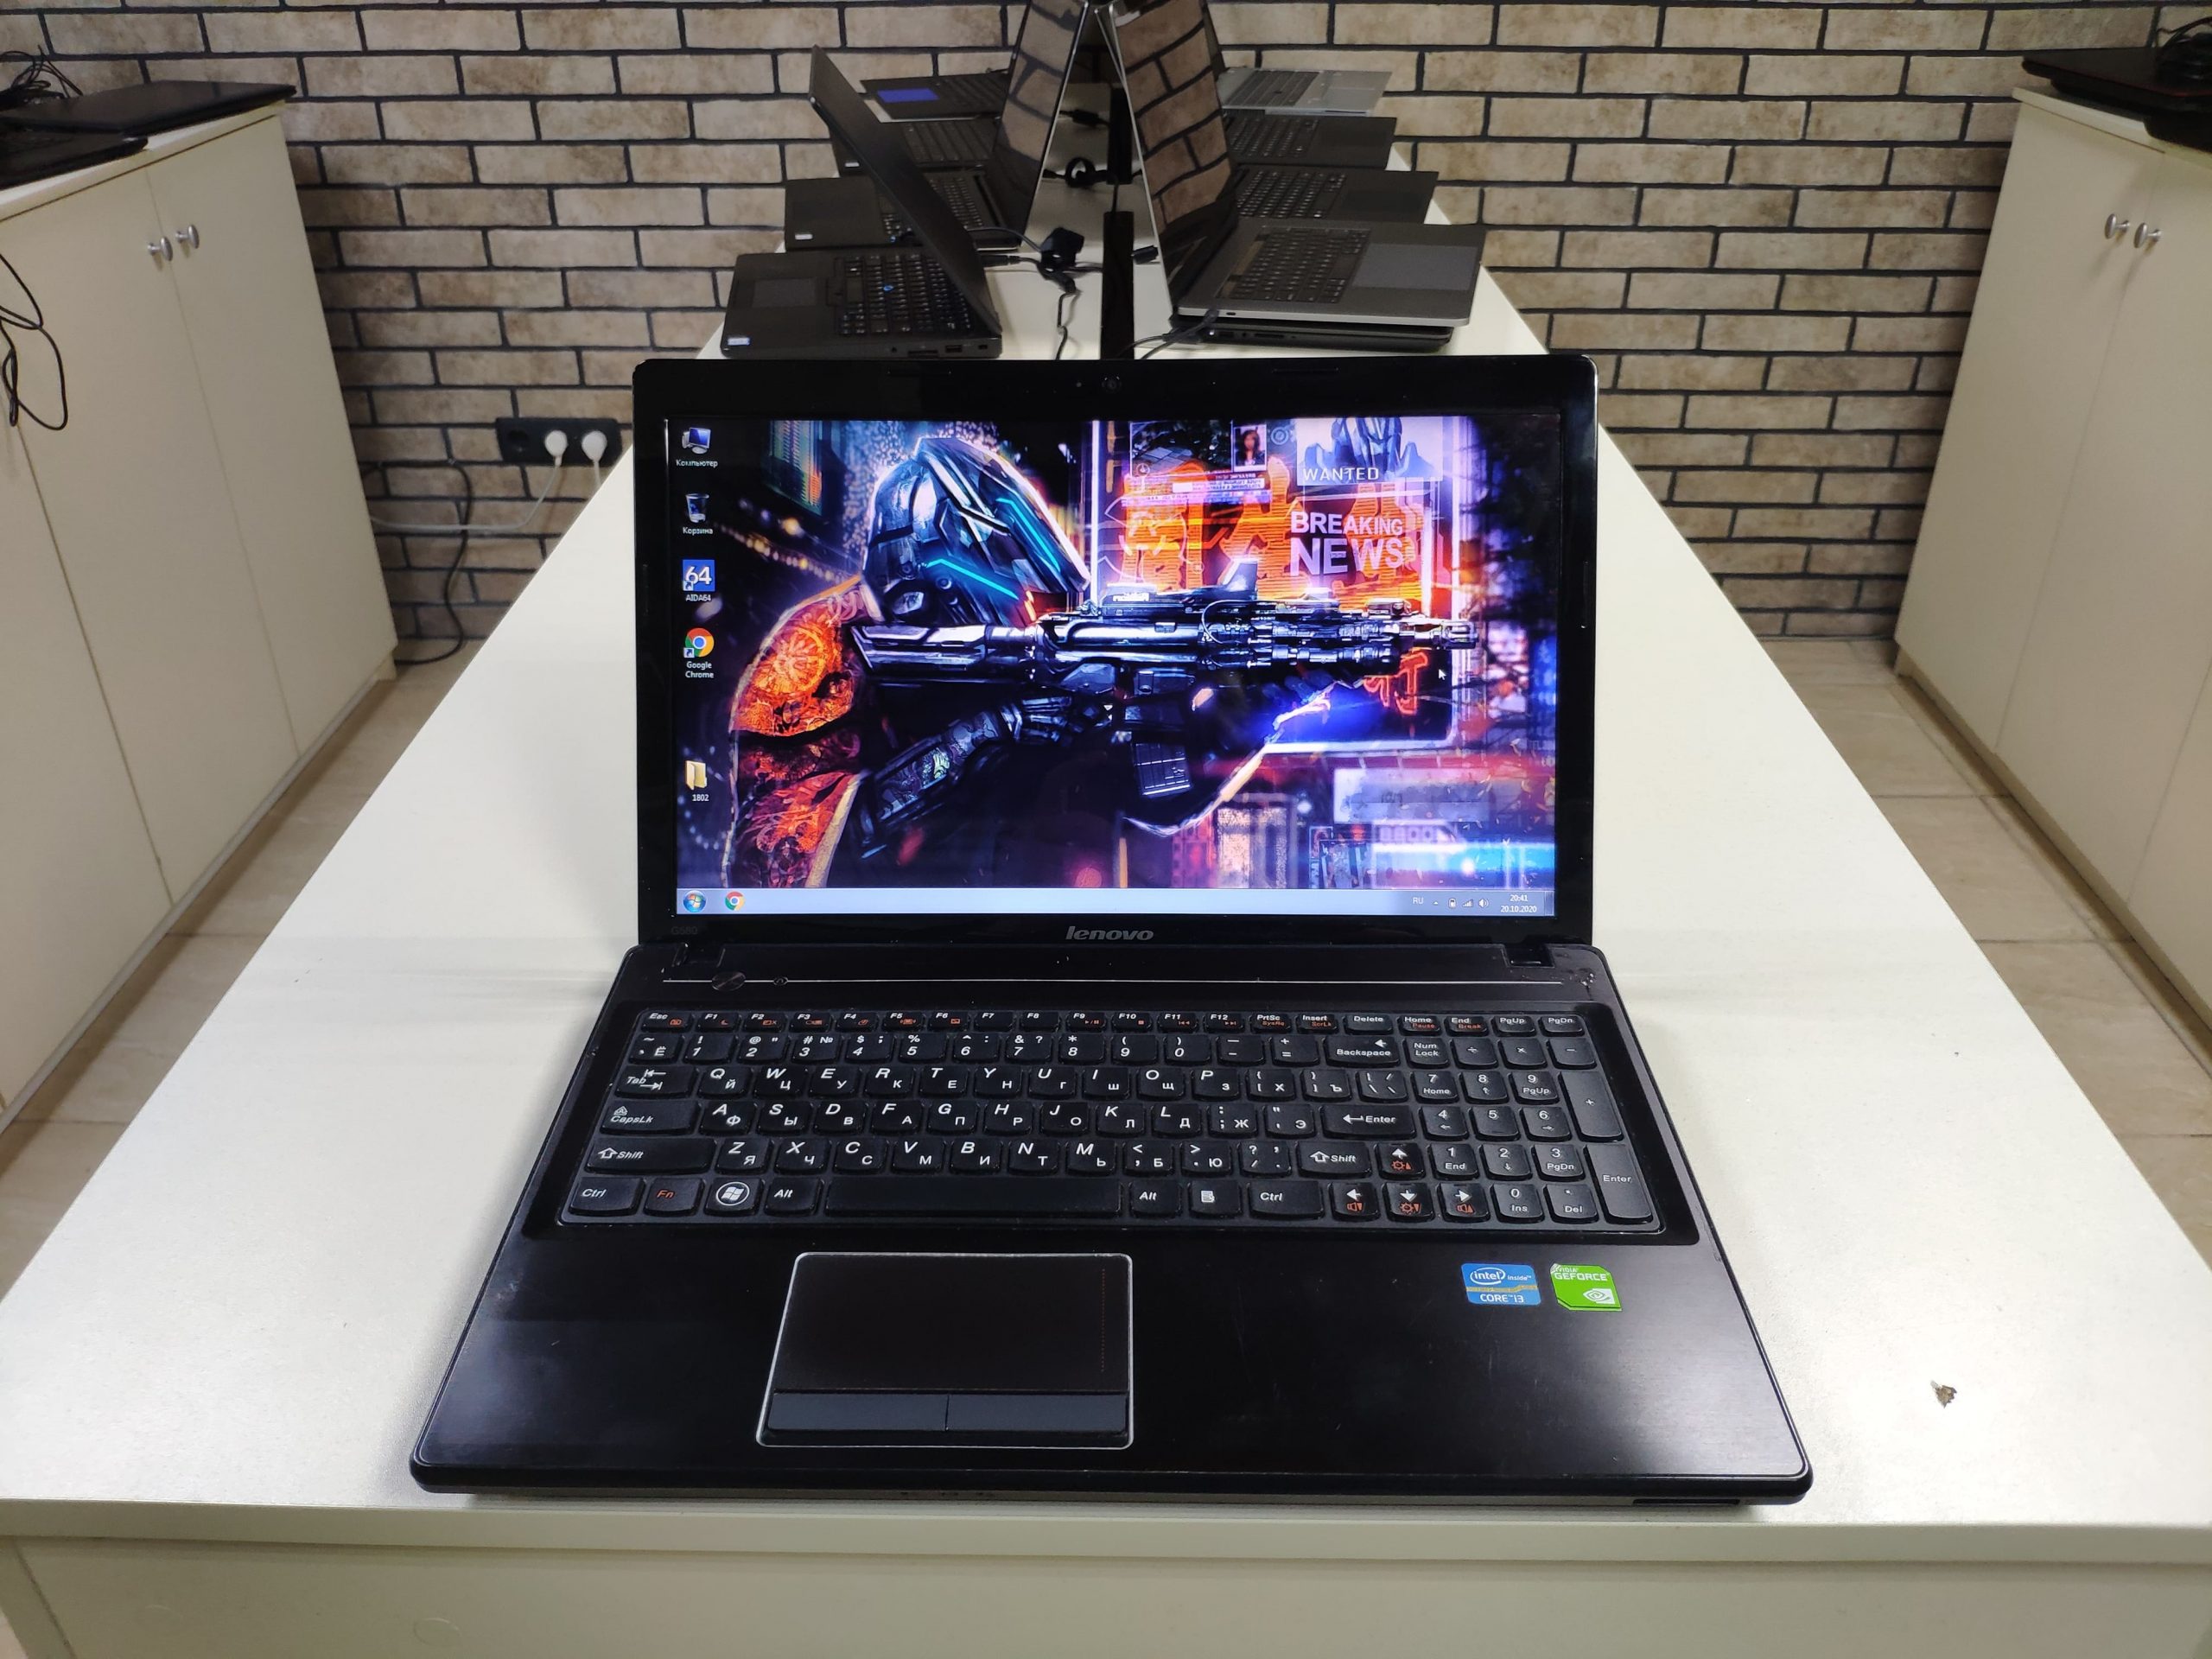 Купить Ноутбук Lenovo Ideapad G580